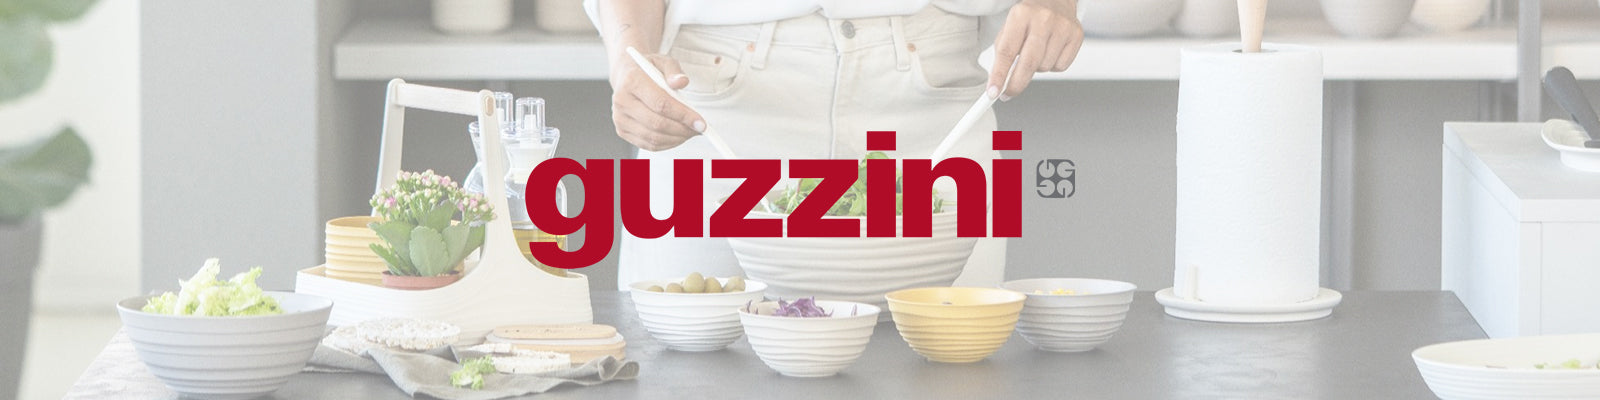 Modern Quests Guzzini products